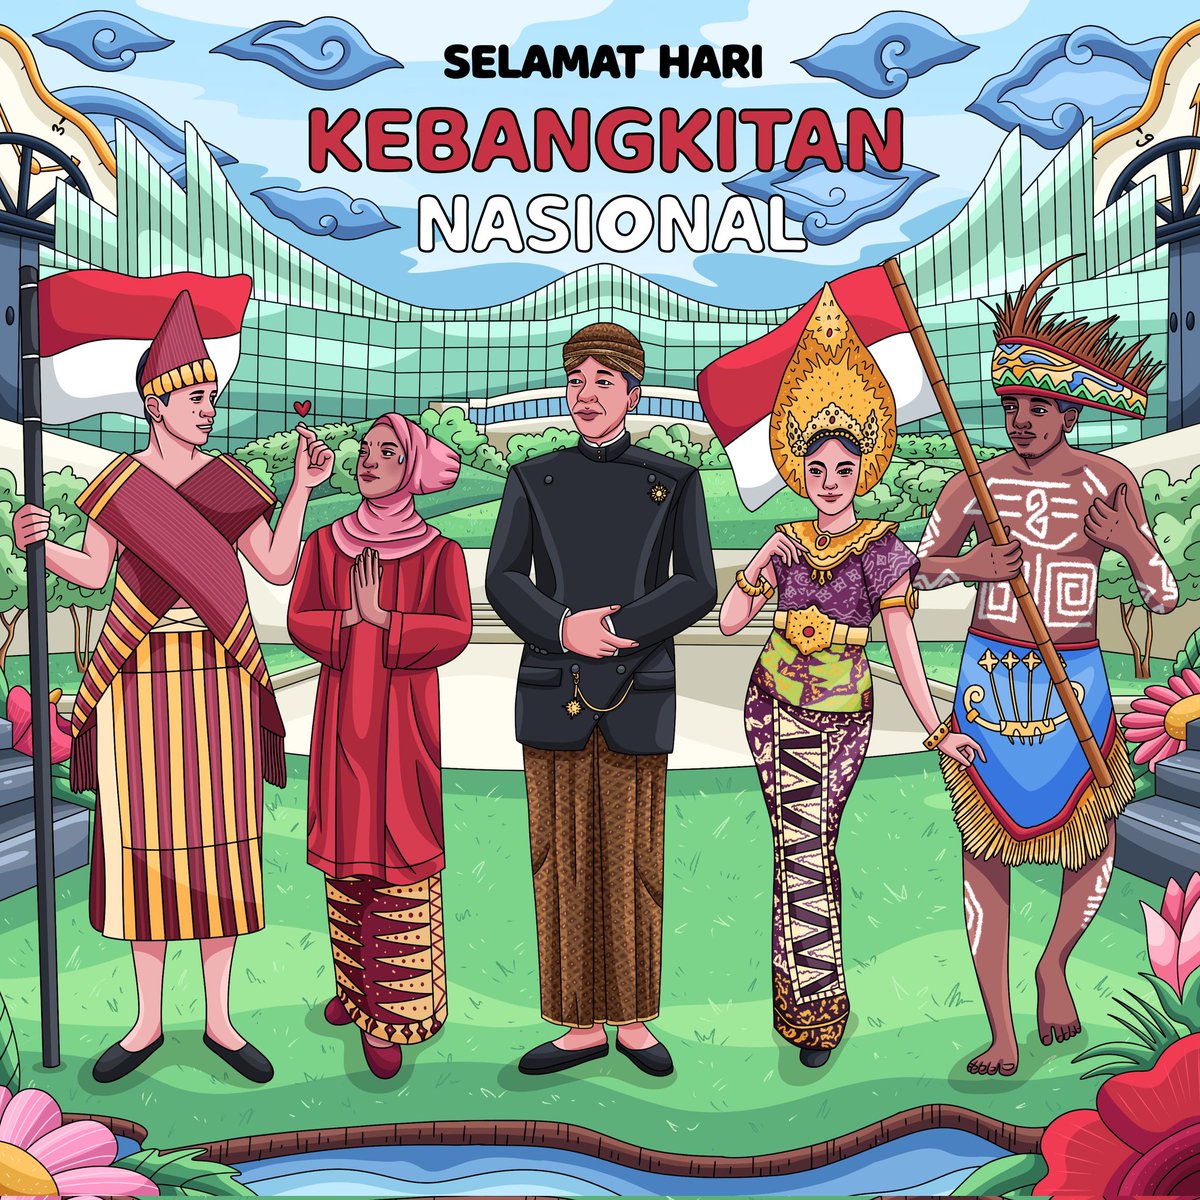 Hari ini selalu mengingatkan kita pada titik awal kebangsaan sebagai negeri Indonesia. Mari maju bersama, bangkitkan semangat nasionalisme, rasa kesatuan dan persatuan yang tinggi, serta kesadaran sebagai sebuah bangsa. Selamat Hari Kebangkitan Nasional.